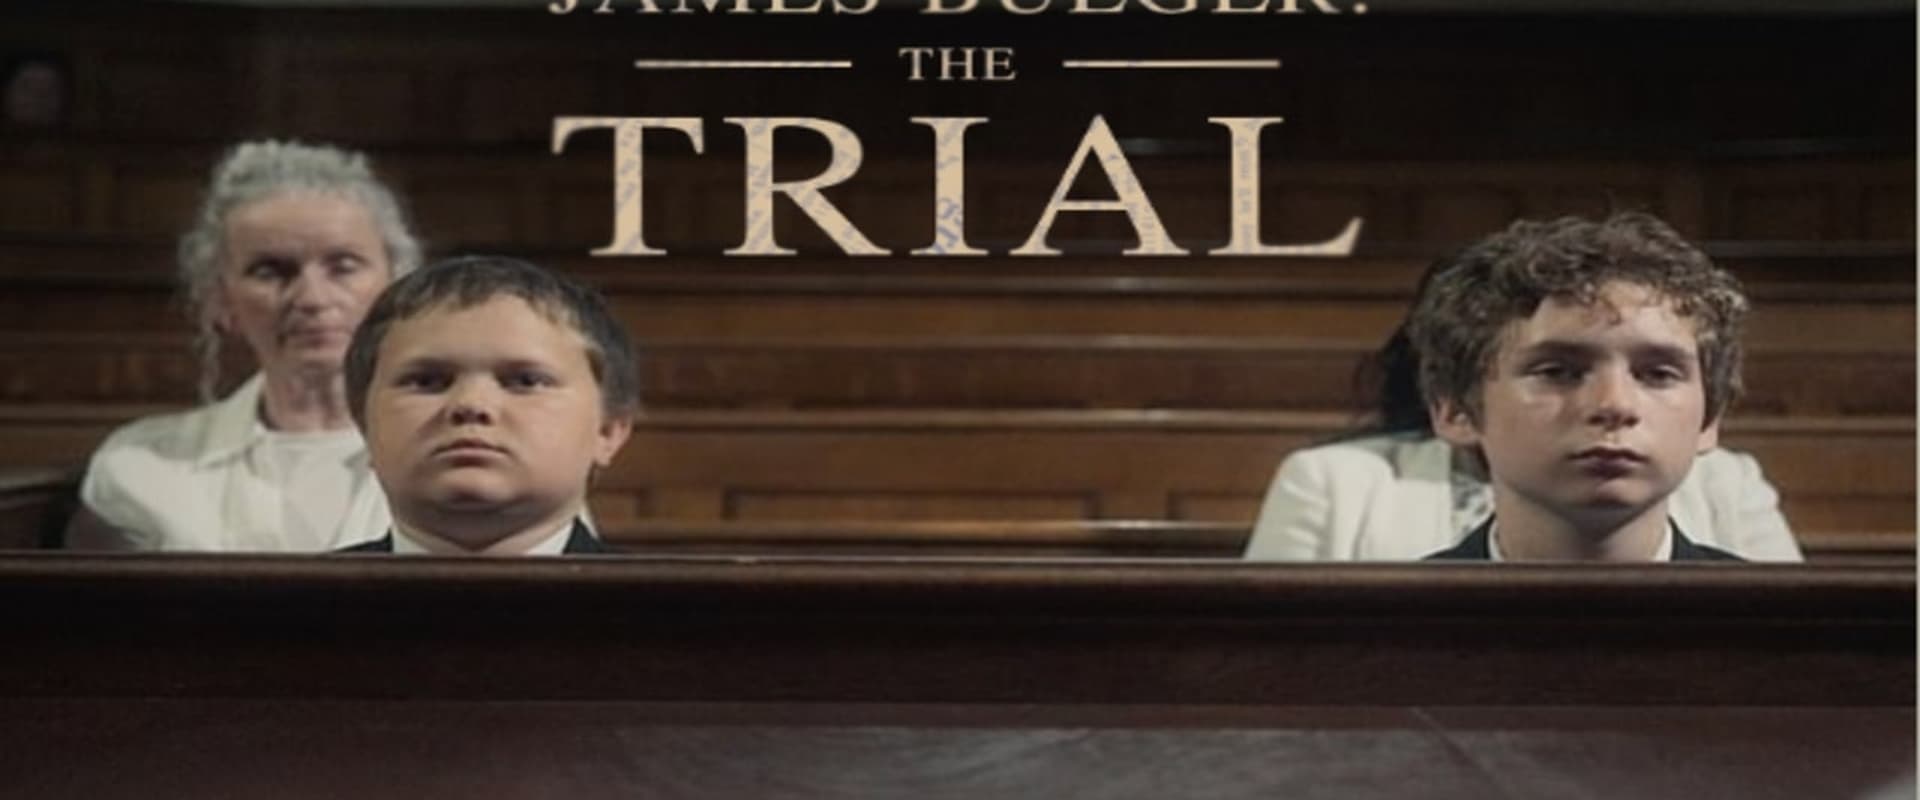 James Bulger: The Trial